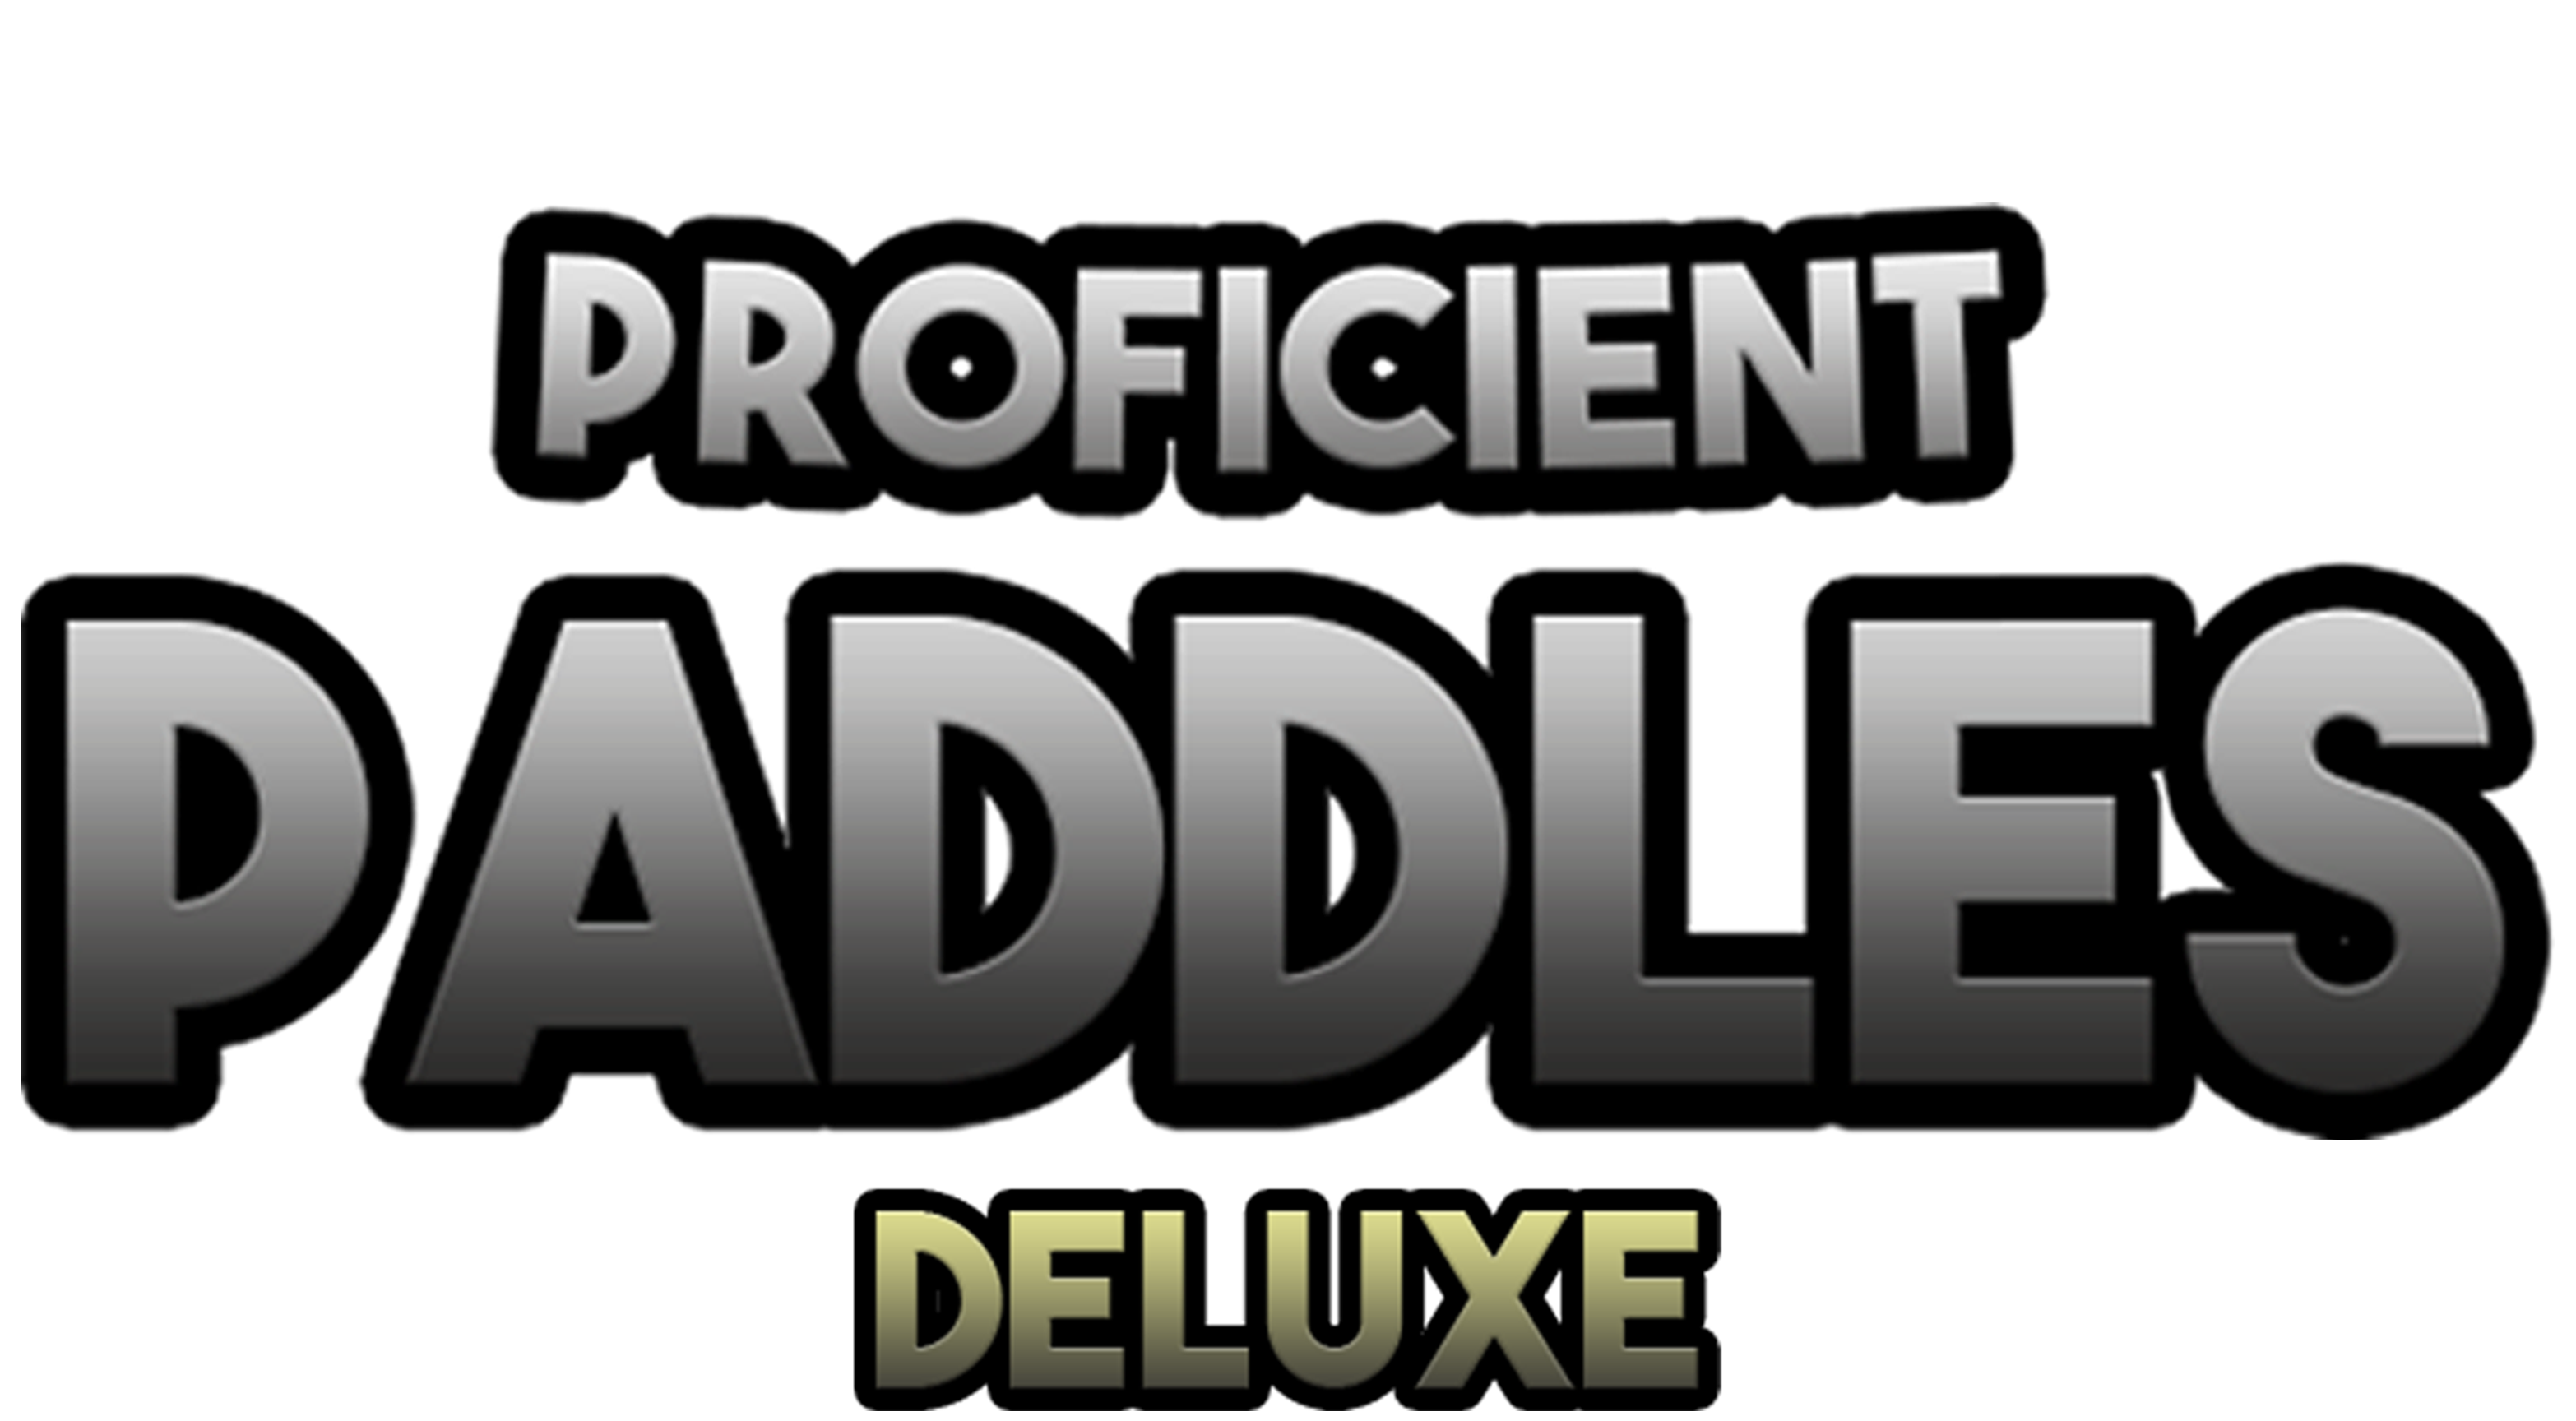 Proficient Paddles Deluxe